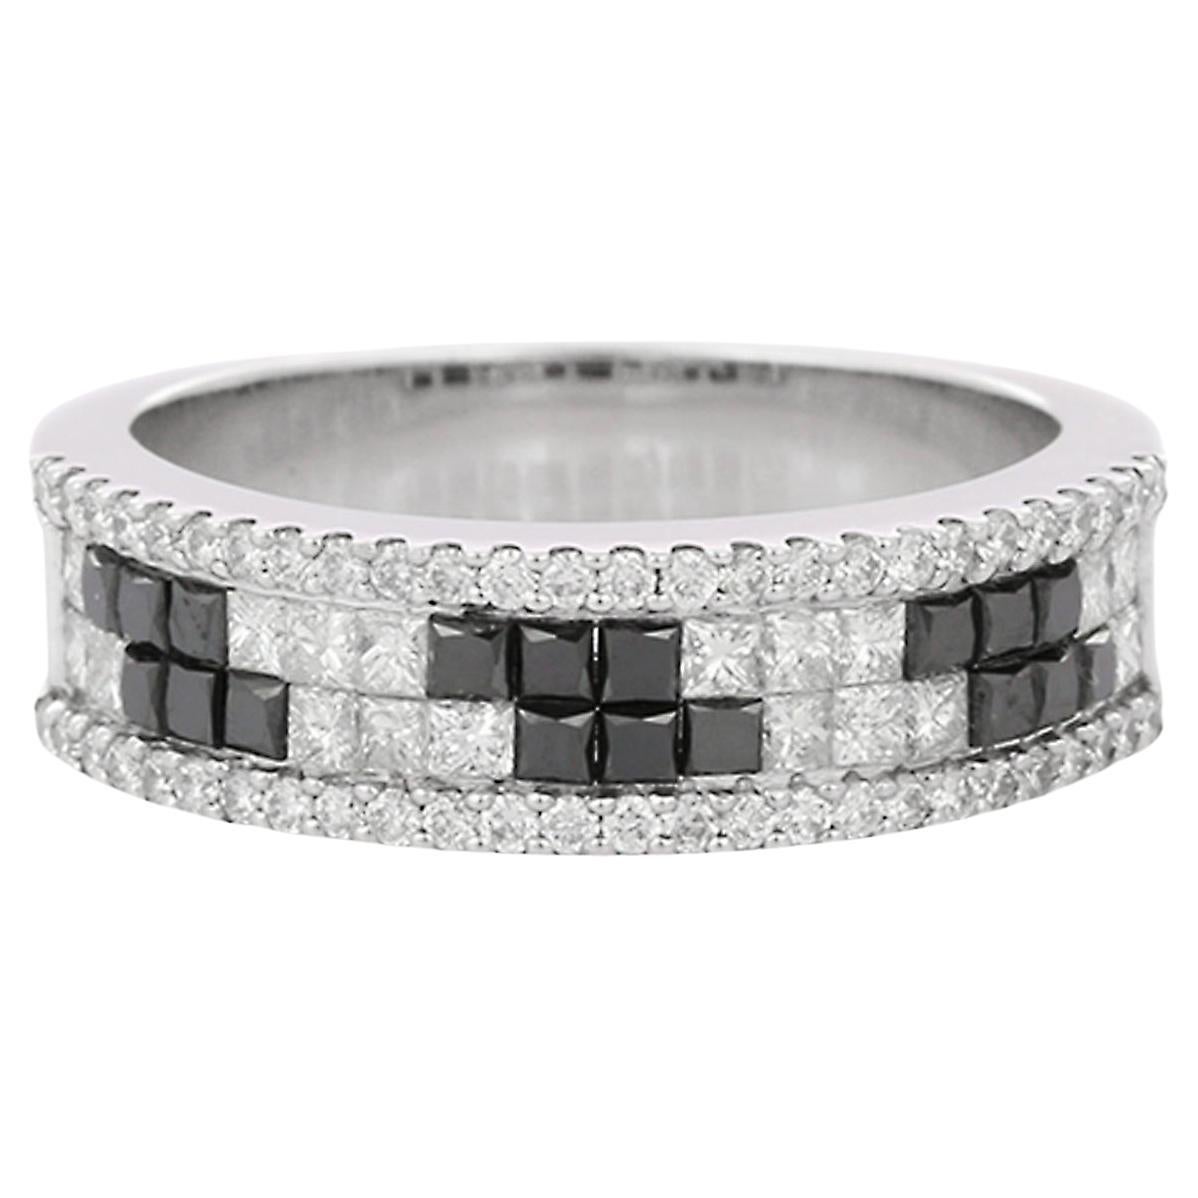 For Sale:  Unisex Black White Diamond Engagement Band Ring in 18K White Gold